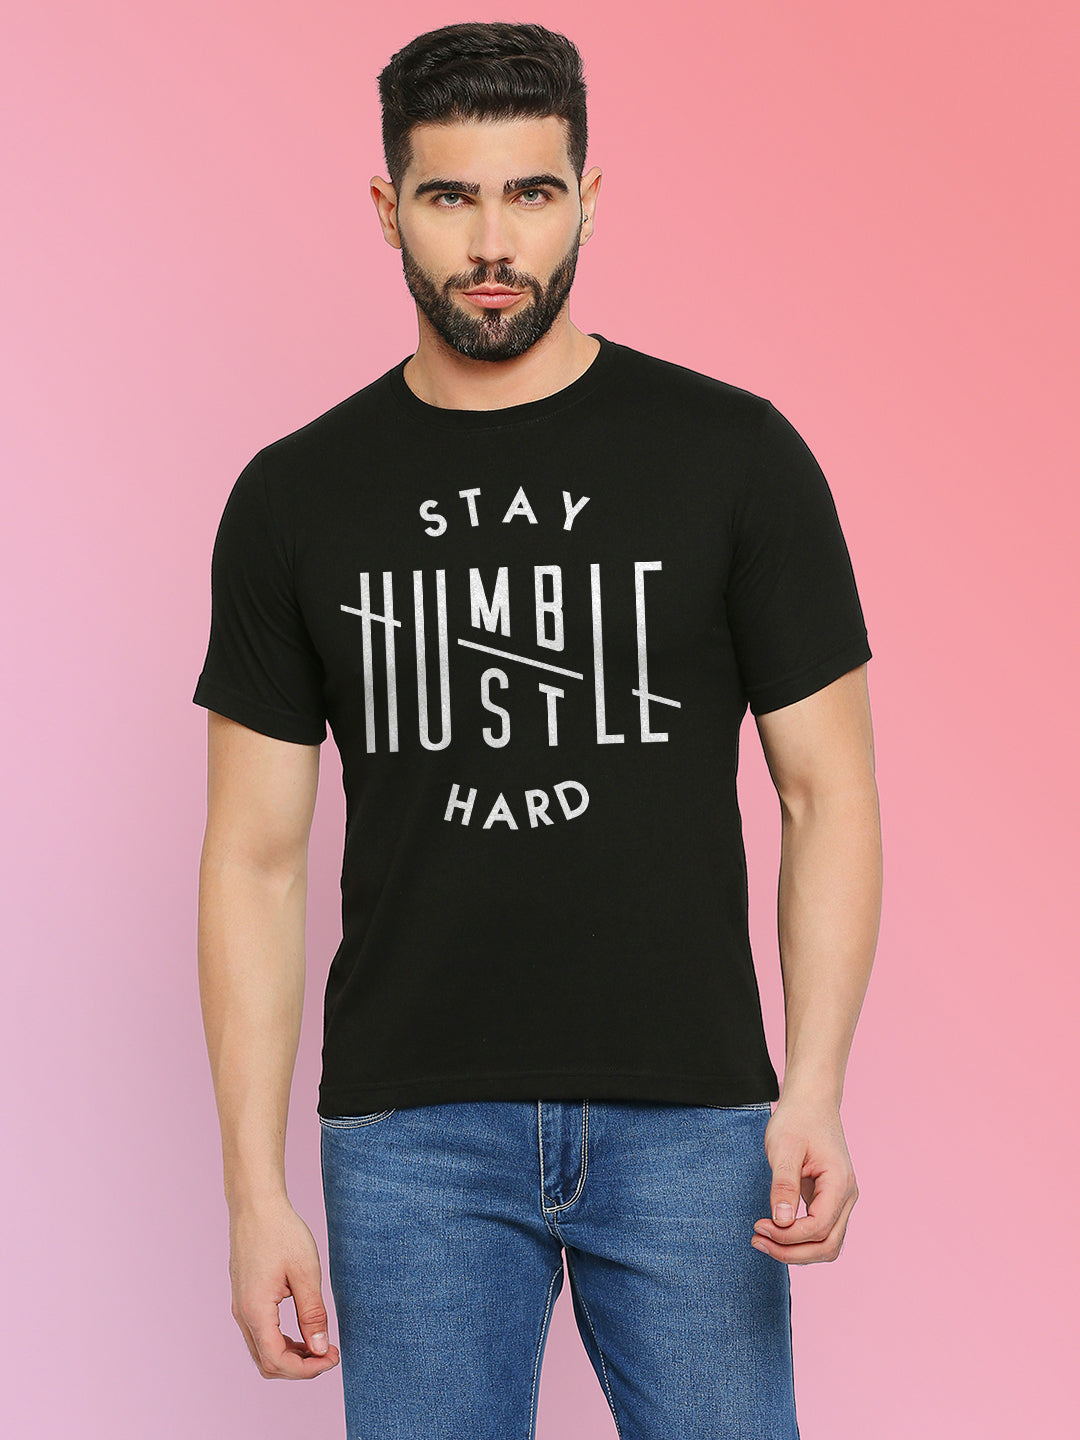 Stay Humble Hustle Hard T-Shirt